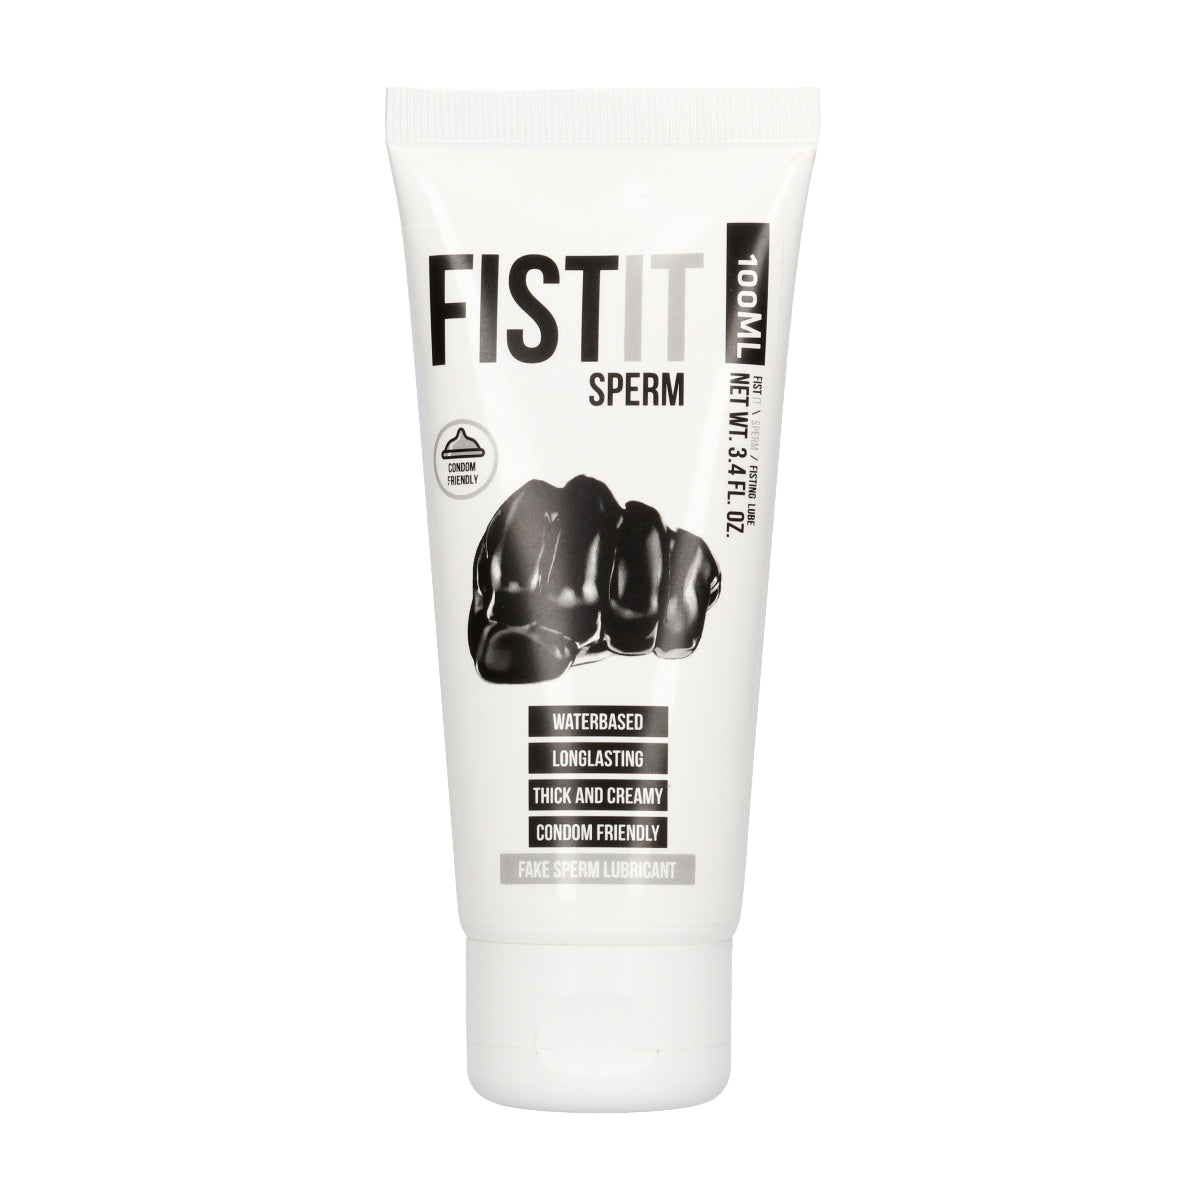 Fisting Cream & Anal Relaxants Fist It - Sperm - 100 ml   